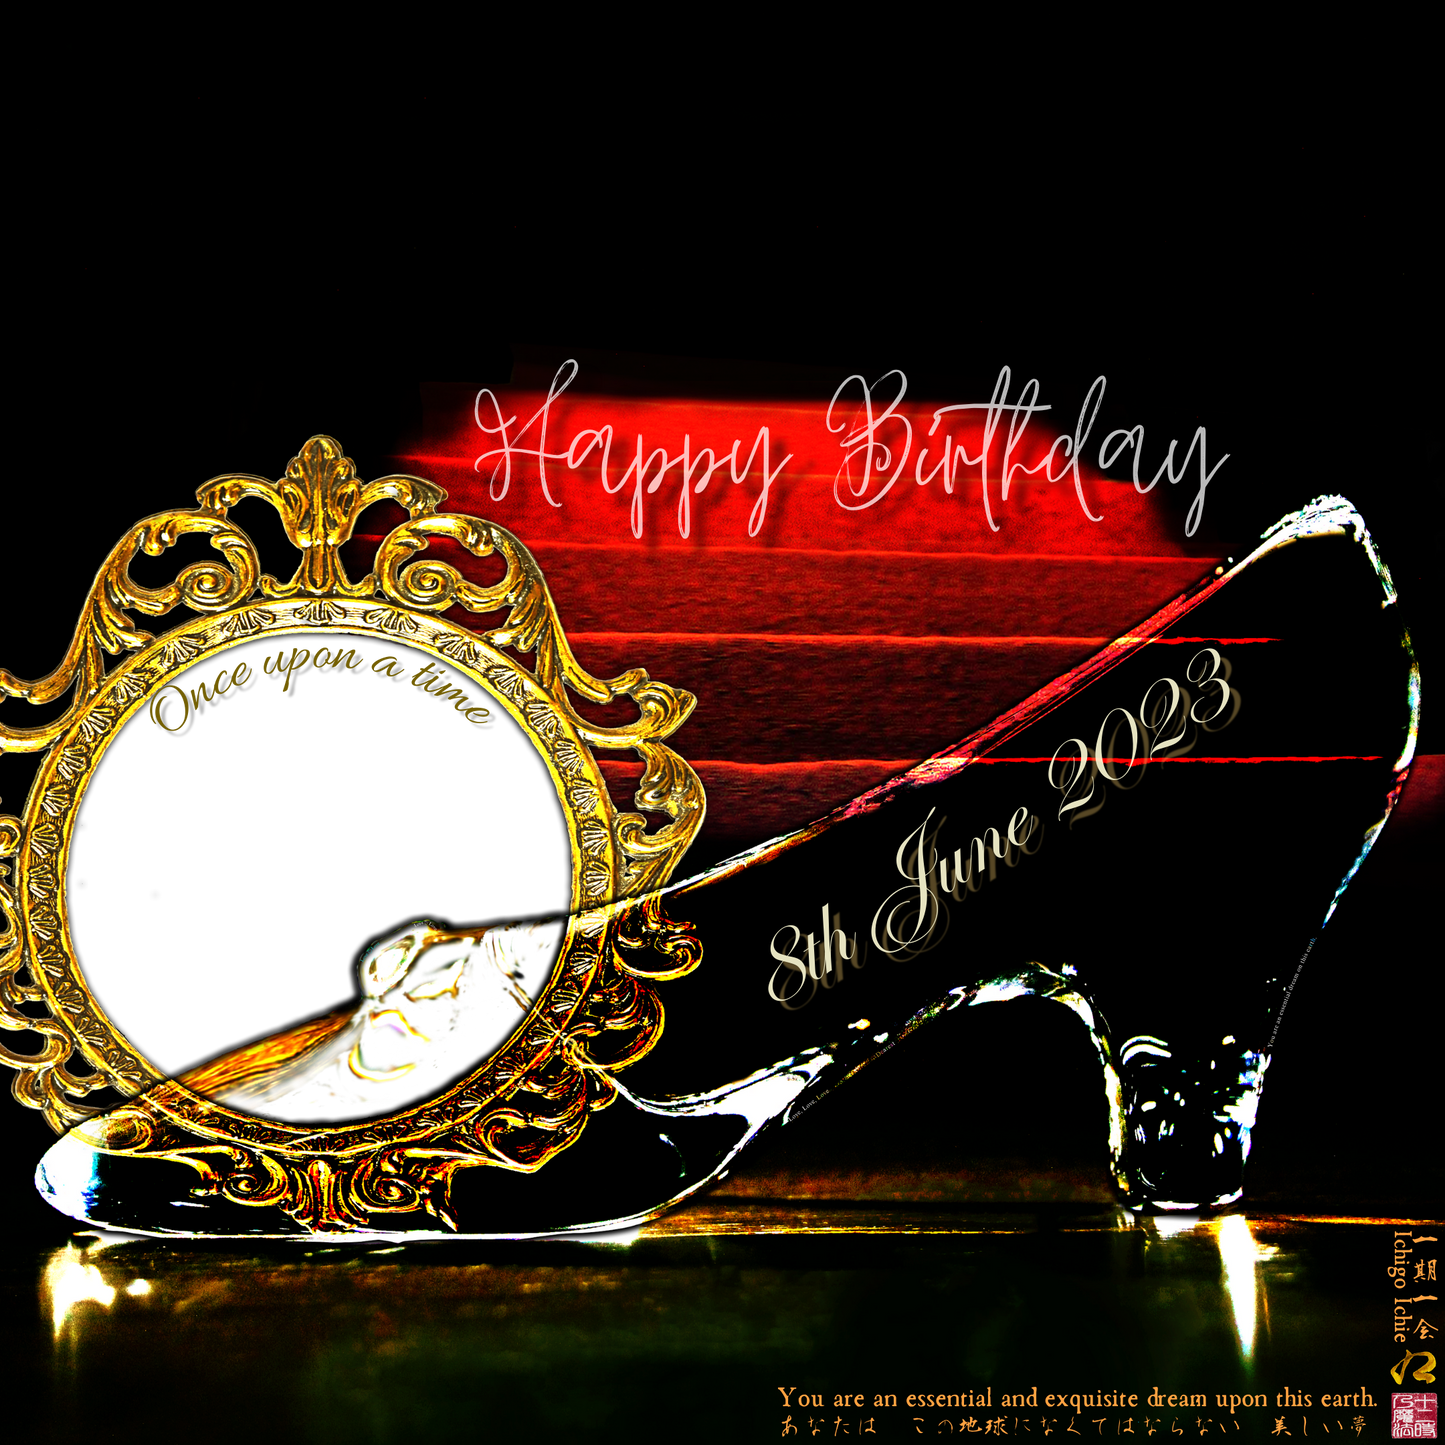 Happy Birthday Glass Slipper "Ichigo Ichie" 8th June 2023 the Left (1-of-1) NFT Art